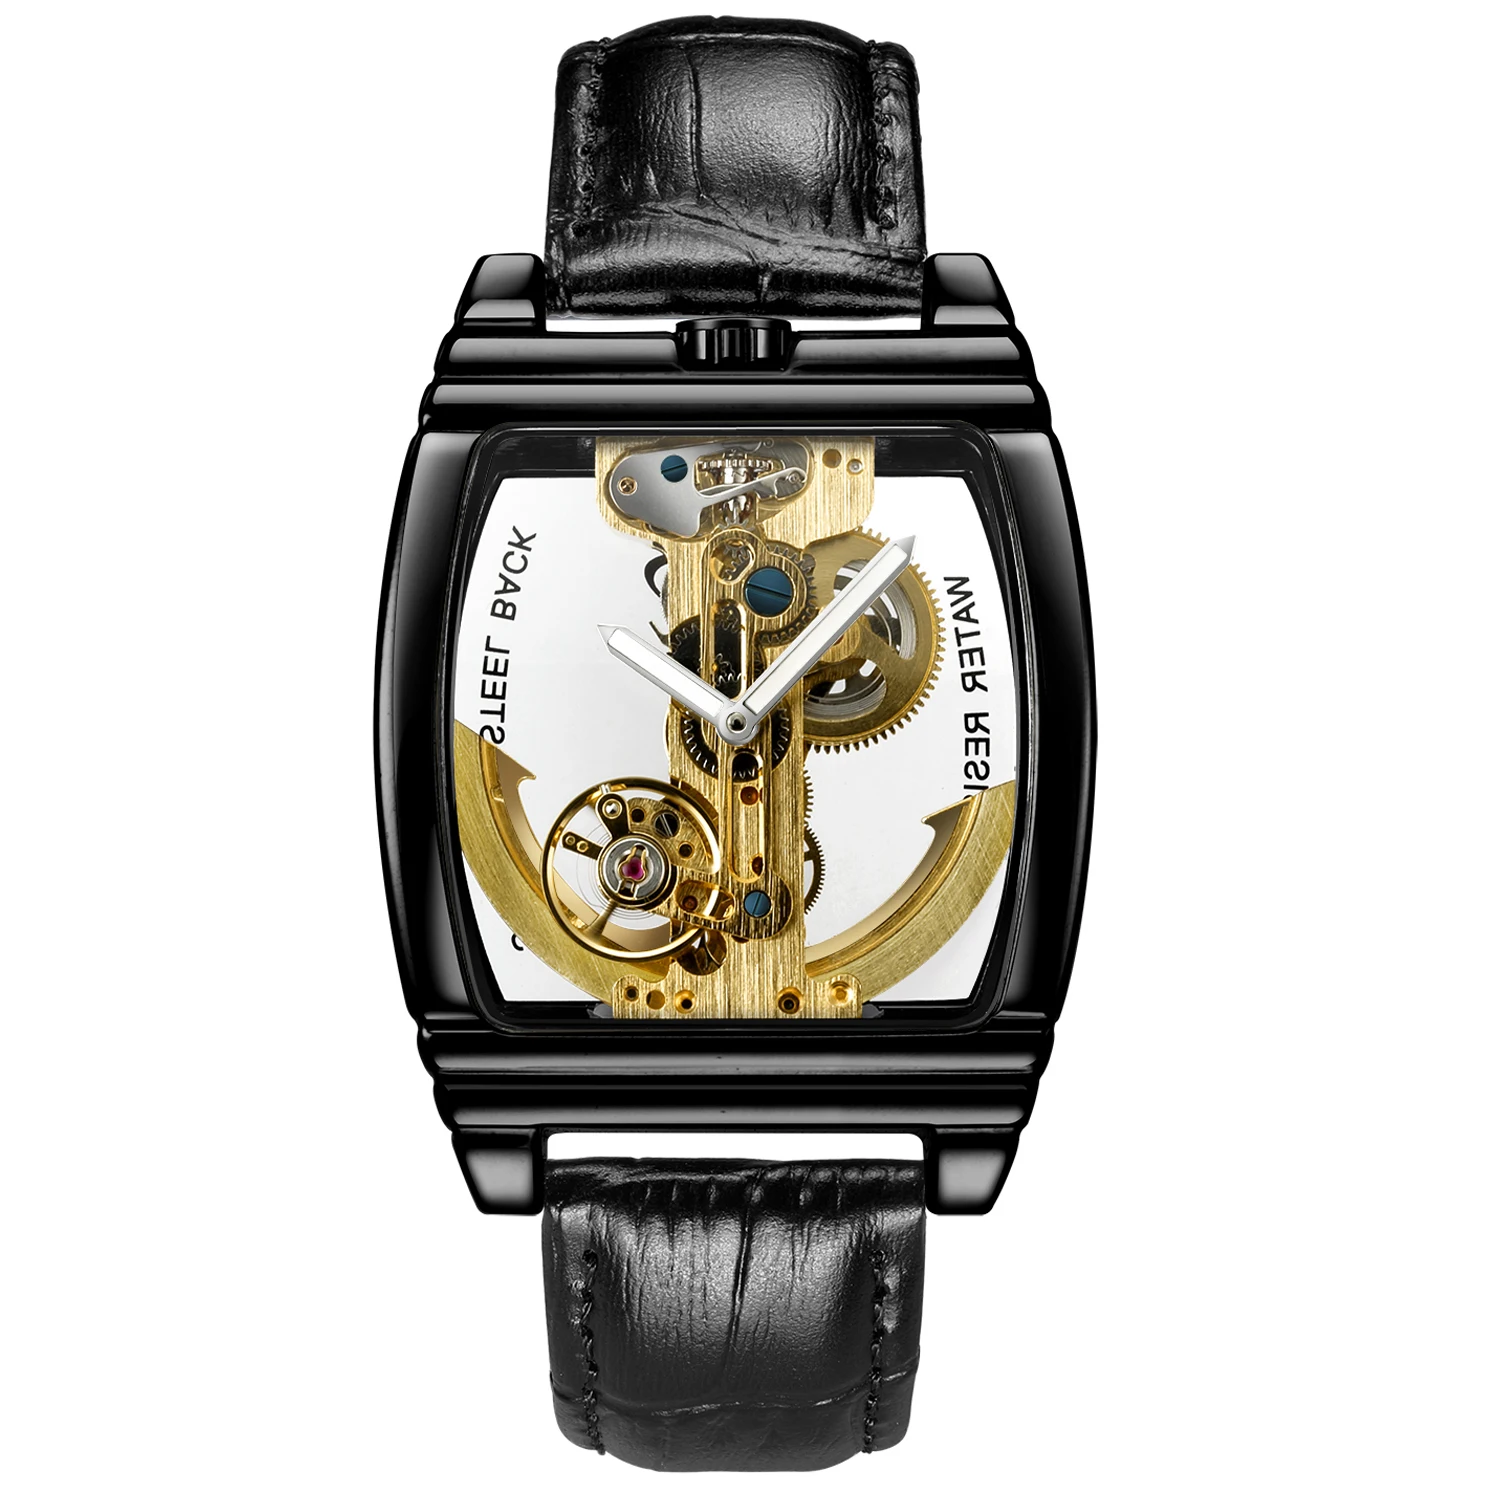 Full Automatic Tourbillon Mechanical Watch for Men Luxury Skeleton Transparent 3D Hollow Dial Case Steel Wristwatch Male Reloj 